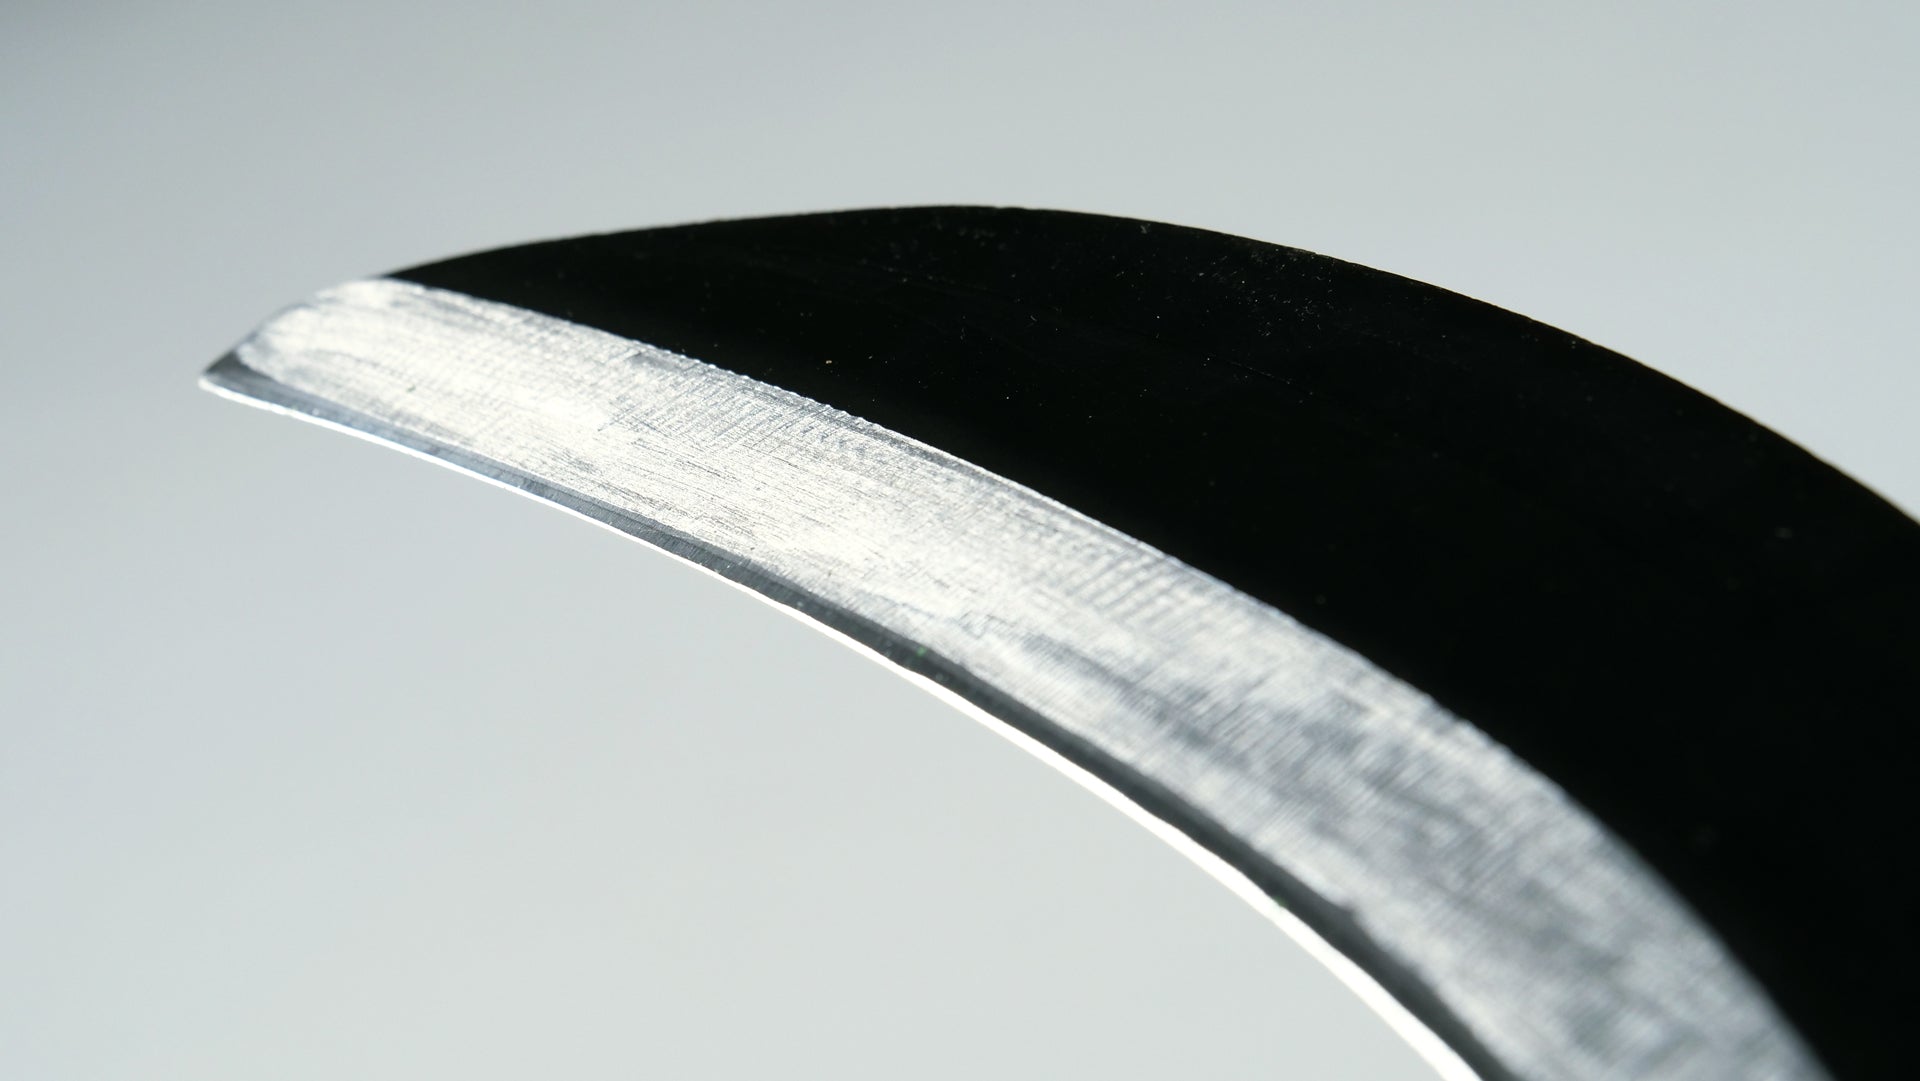 Chikyuma Japanese Weeding Sickle (Medium Blade) 7.09 in (180 mm) - Japanese Gardening Tools